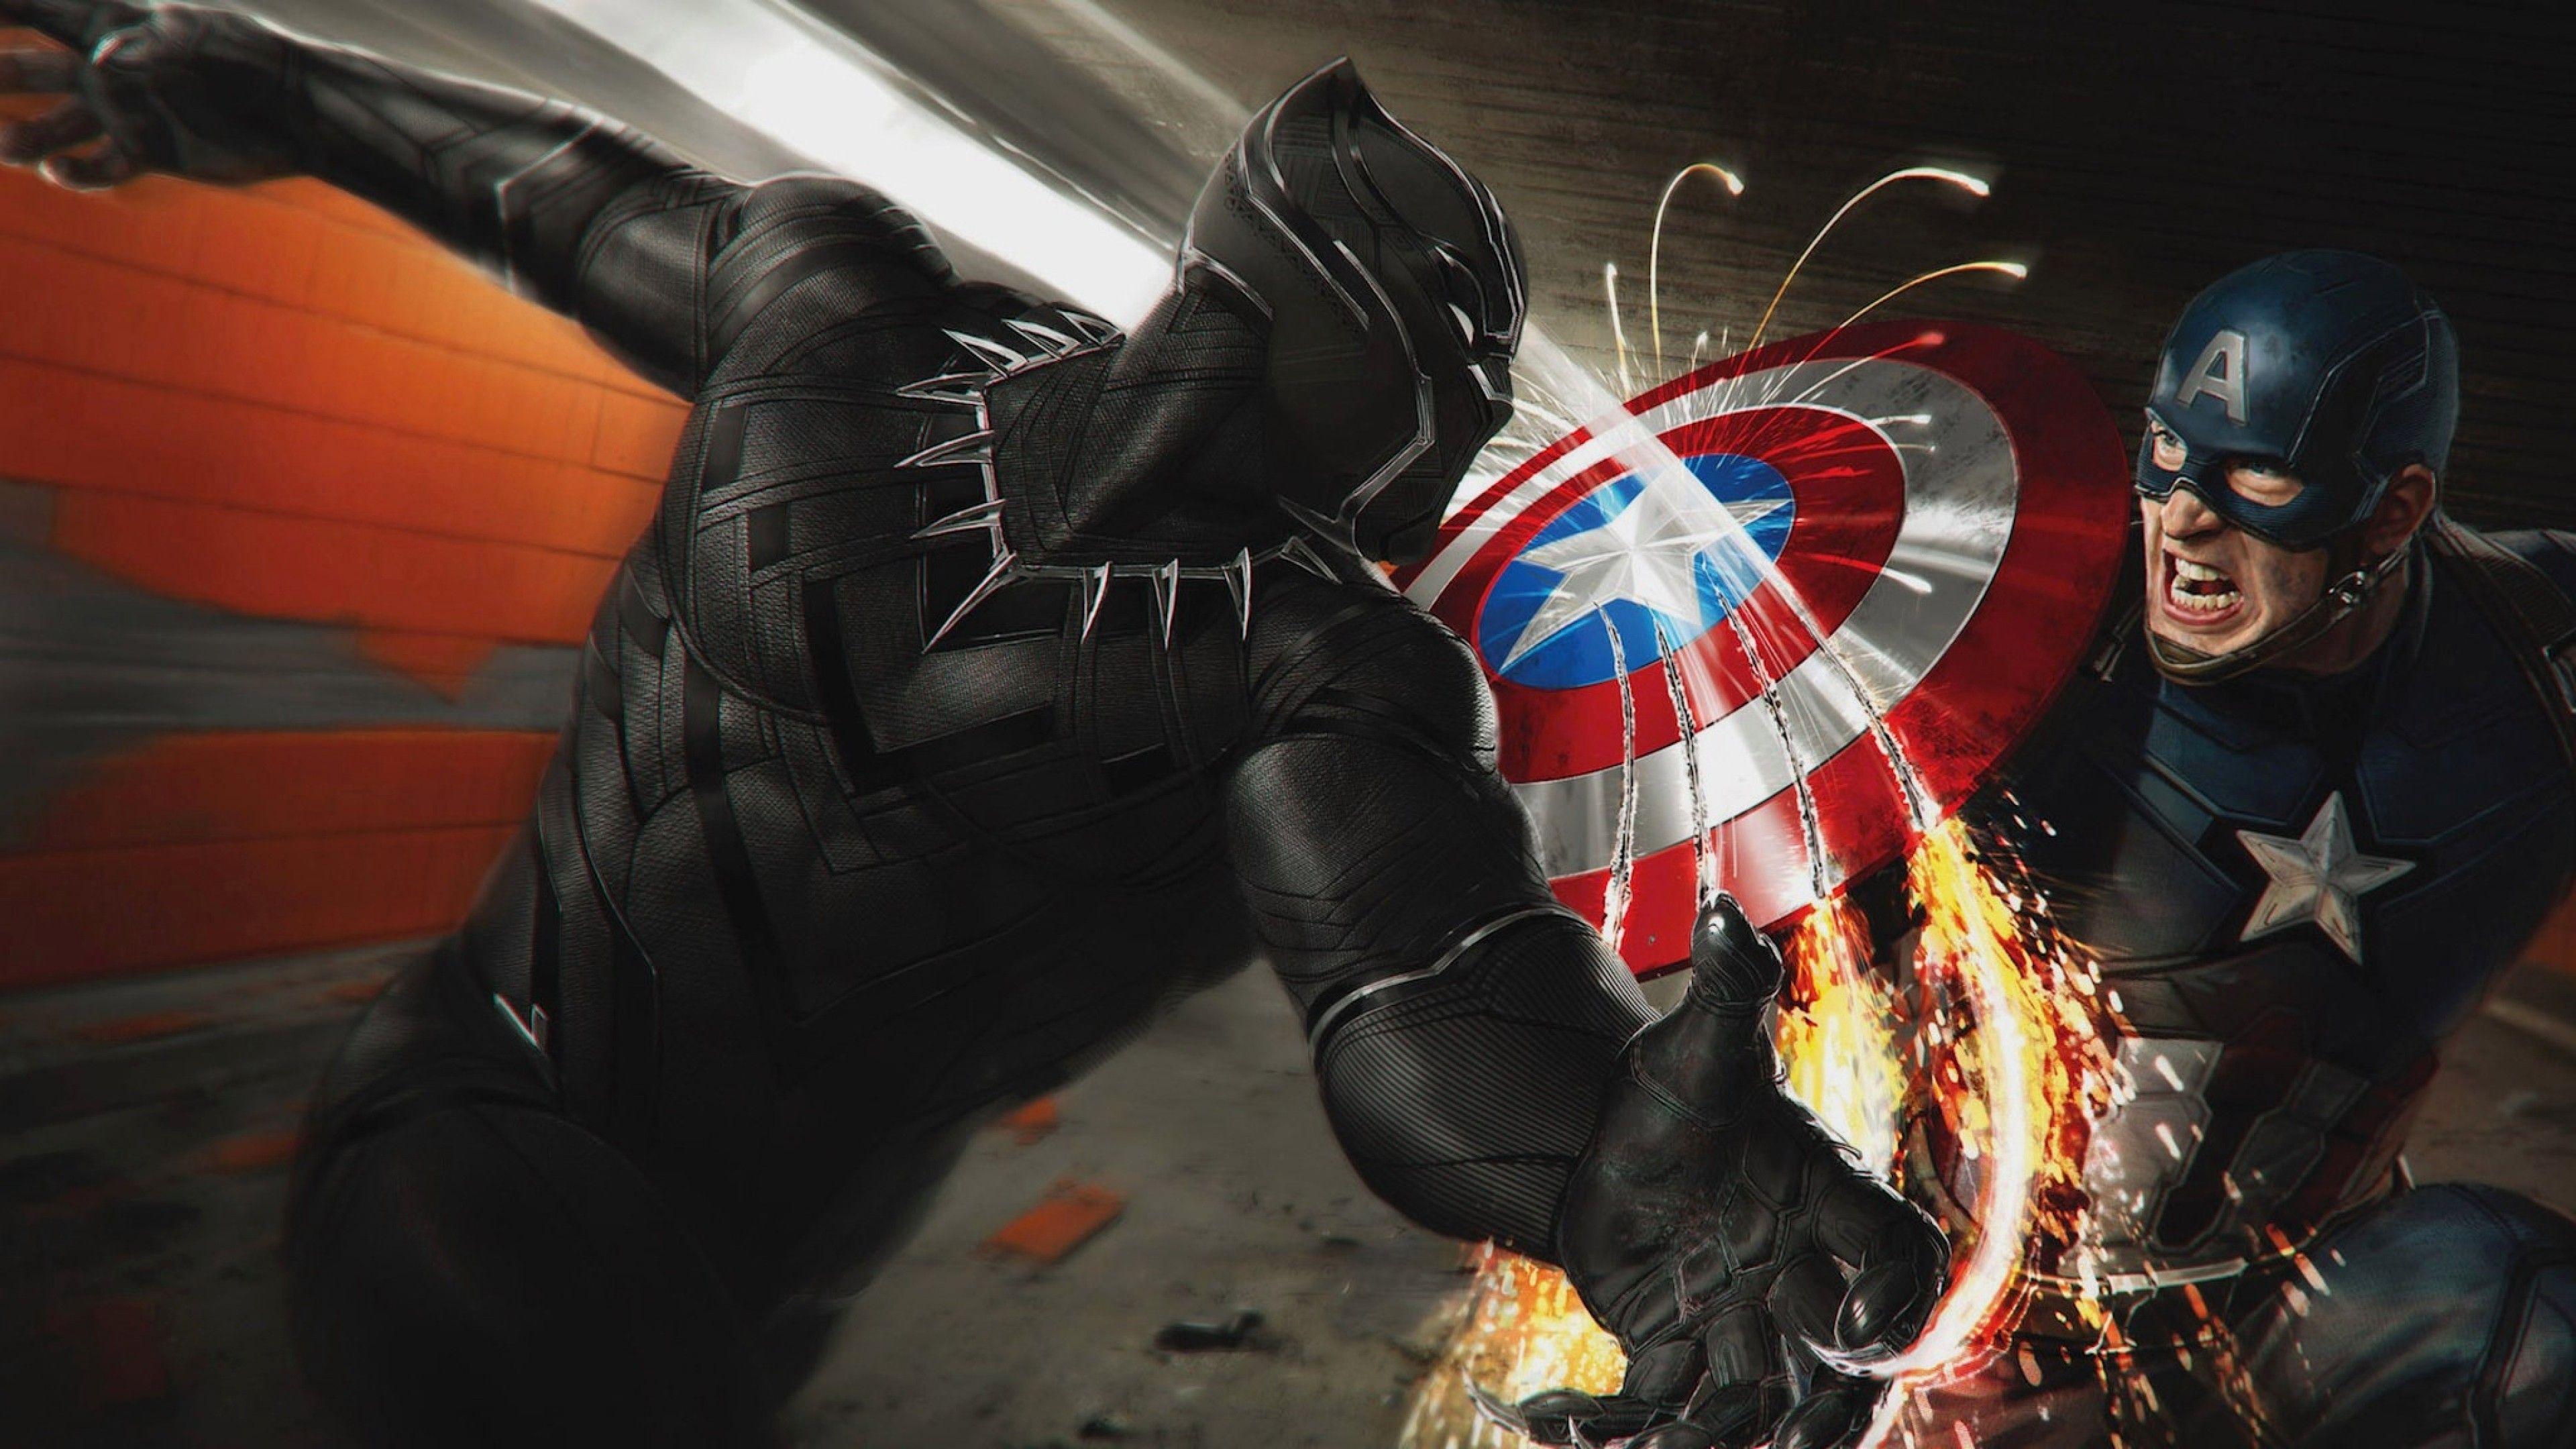 Captain America Vs Black Panther Wallpaper Download in HD 4K